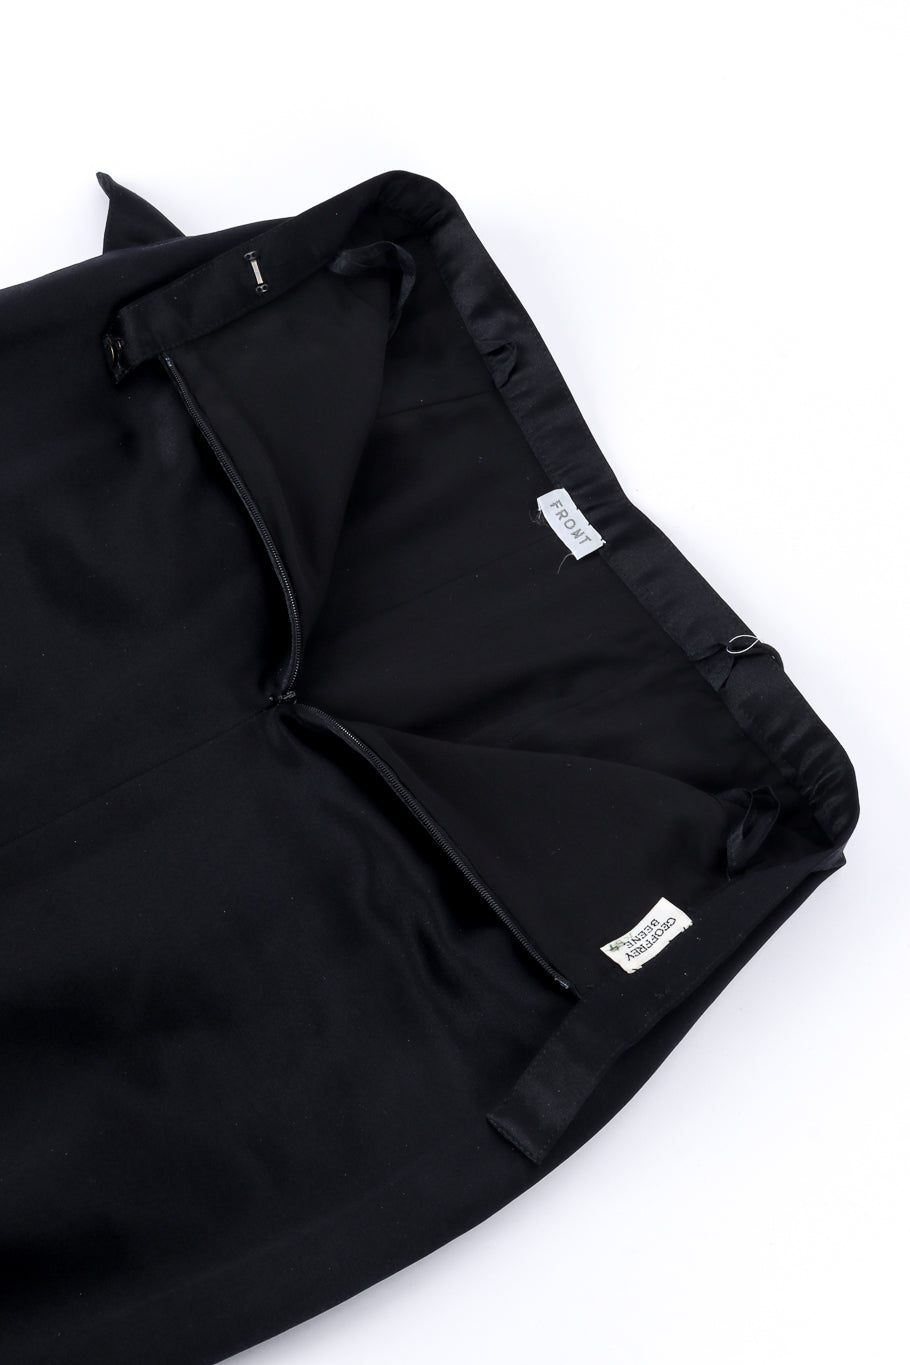 Vintage Geoffrey Beene Peplum Vest and Maxi Skirt Set skirt unzipped @recessla